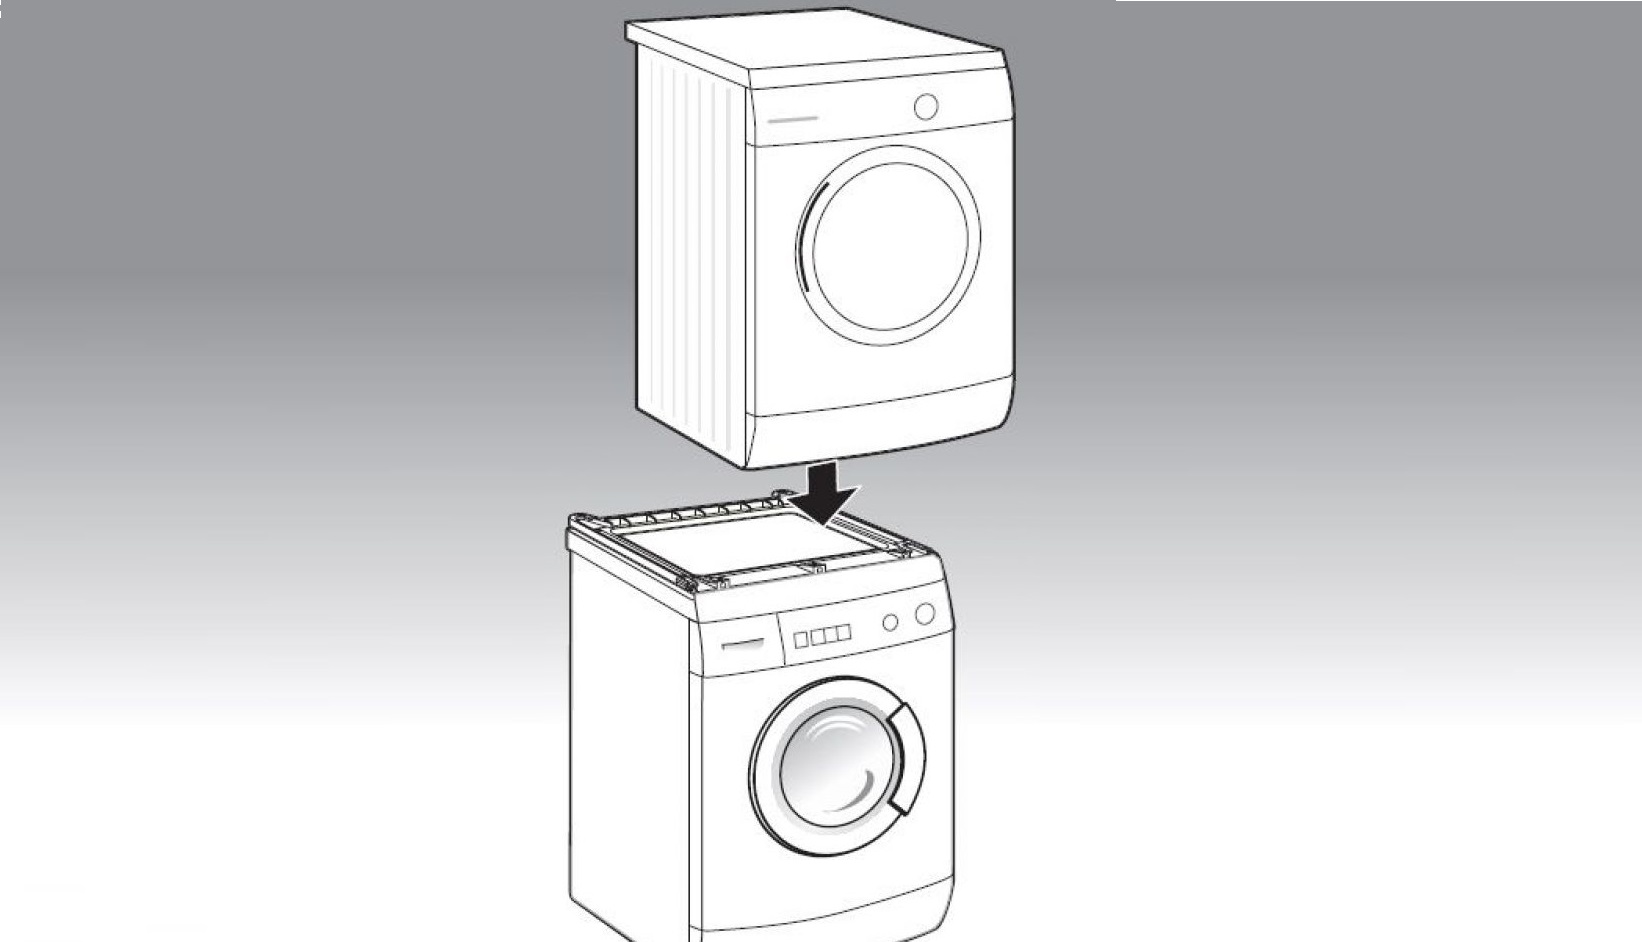 hvordan man sikrer en tørretumbler på en vaskemaskine